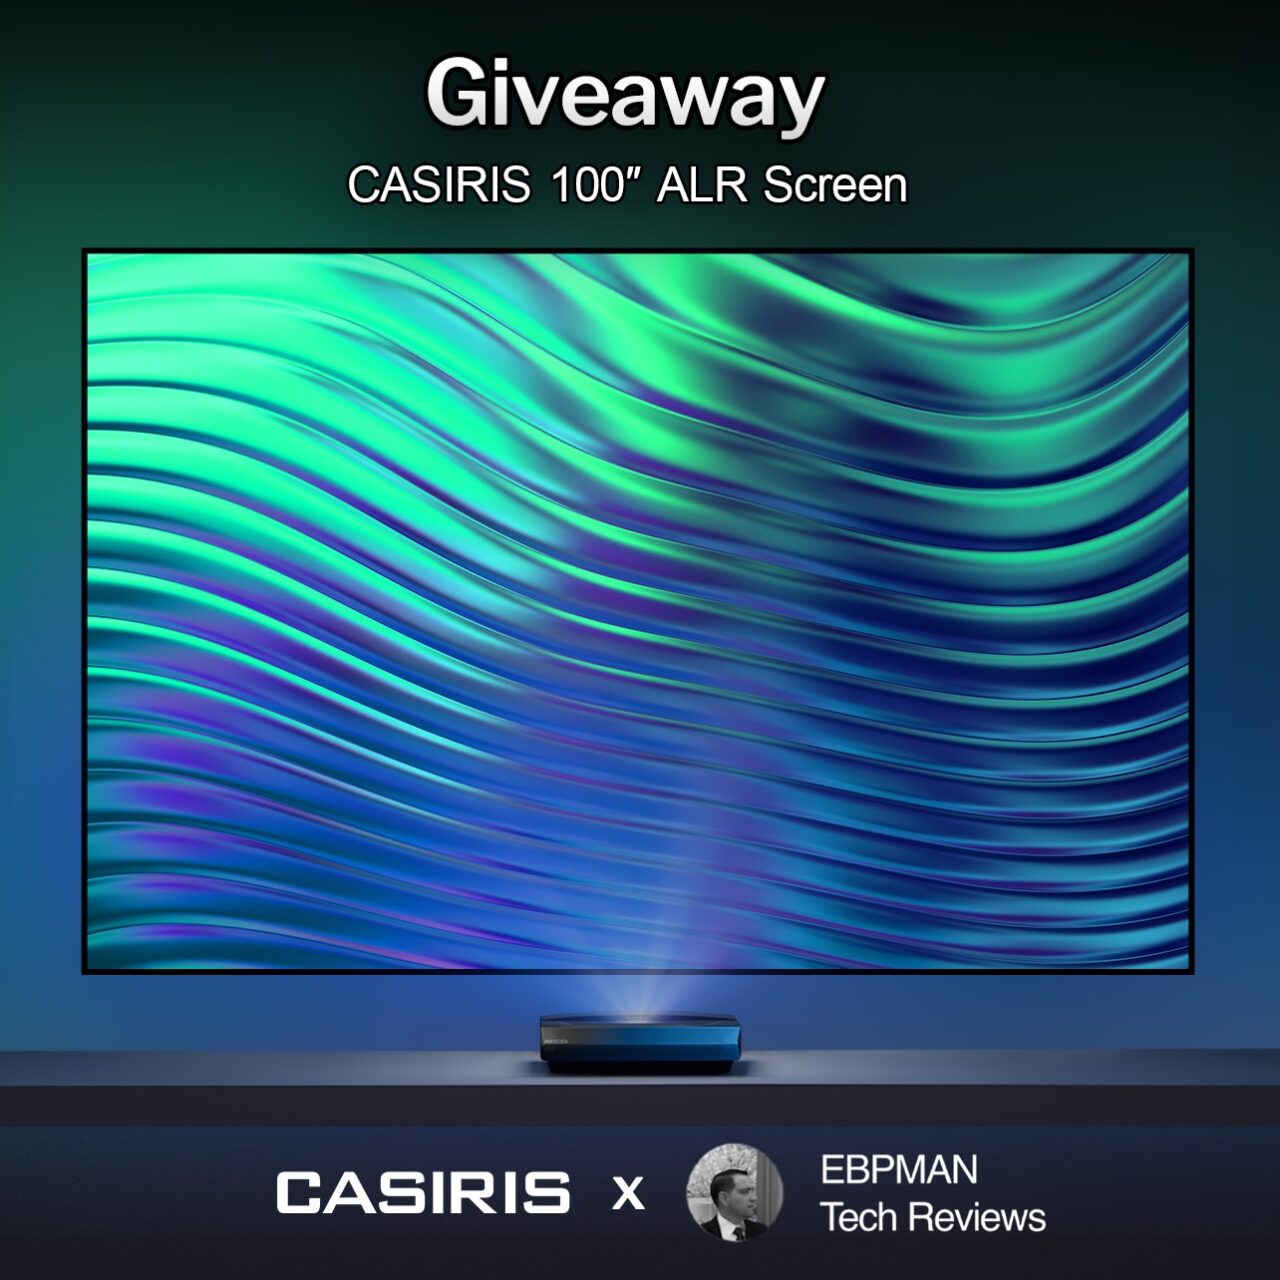 Win Free Casiris 100" ALR Screen Giveaway